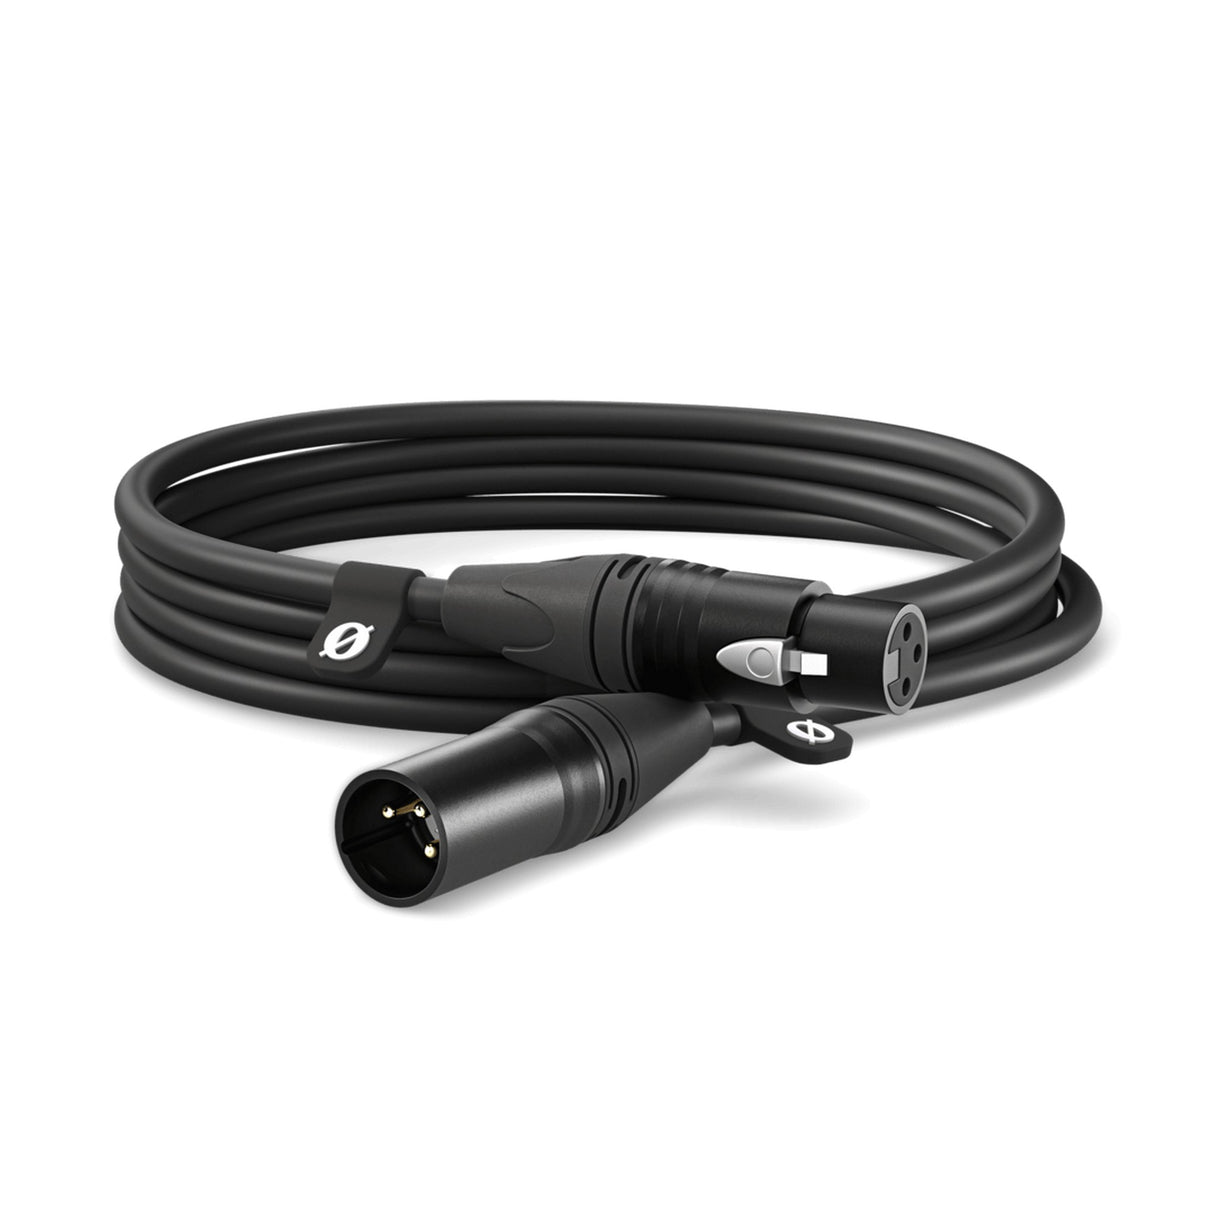 RODE XLR-3 3-Foot Premium Male to Female XLR Cable, Black